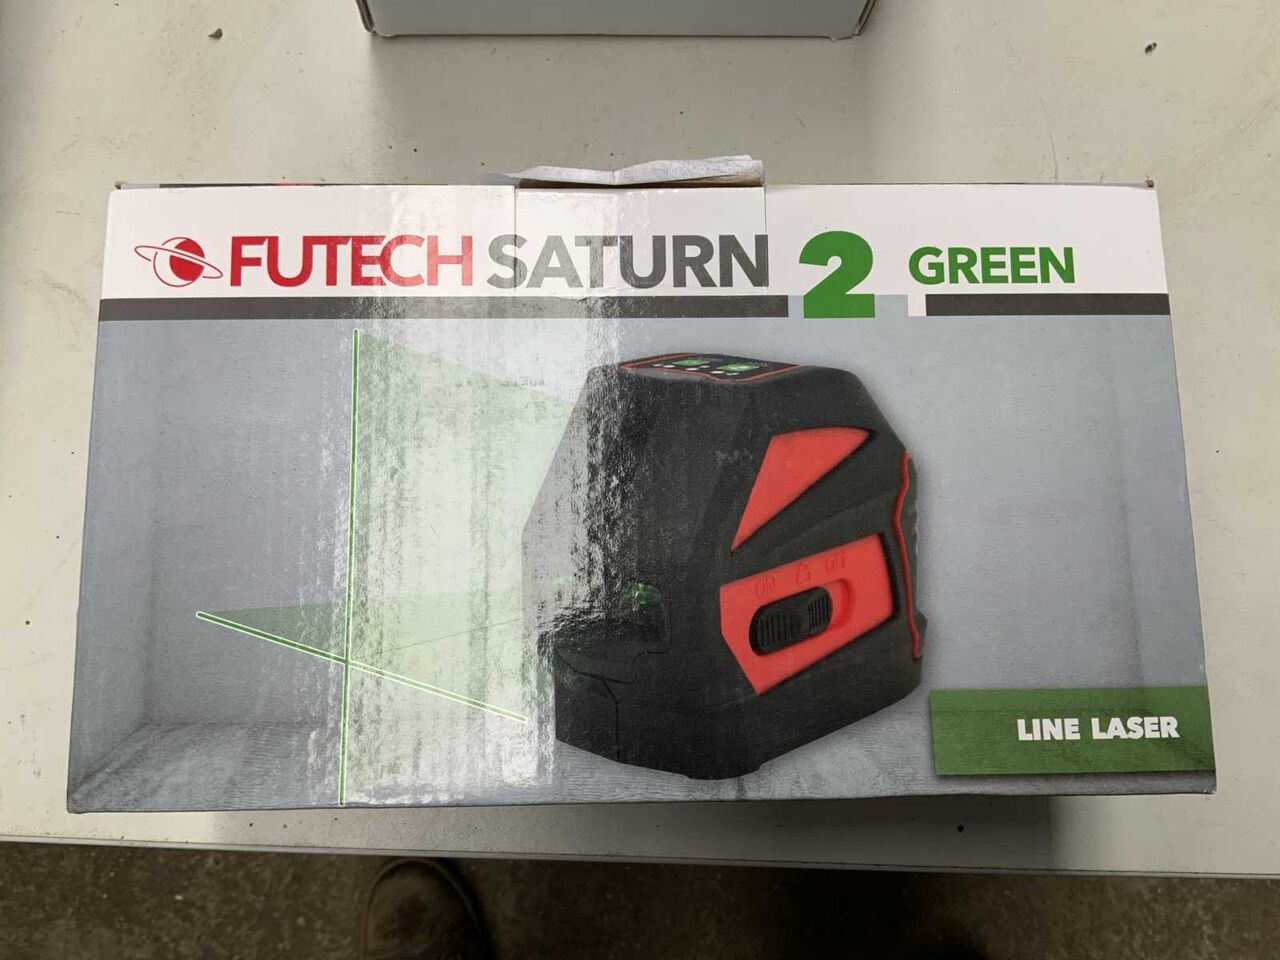 Futech Saturn 2 green measuring tool